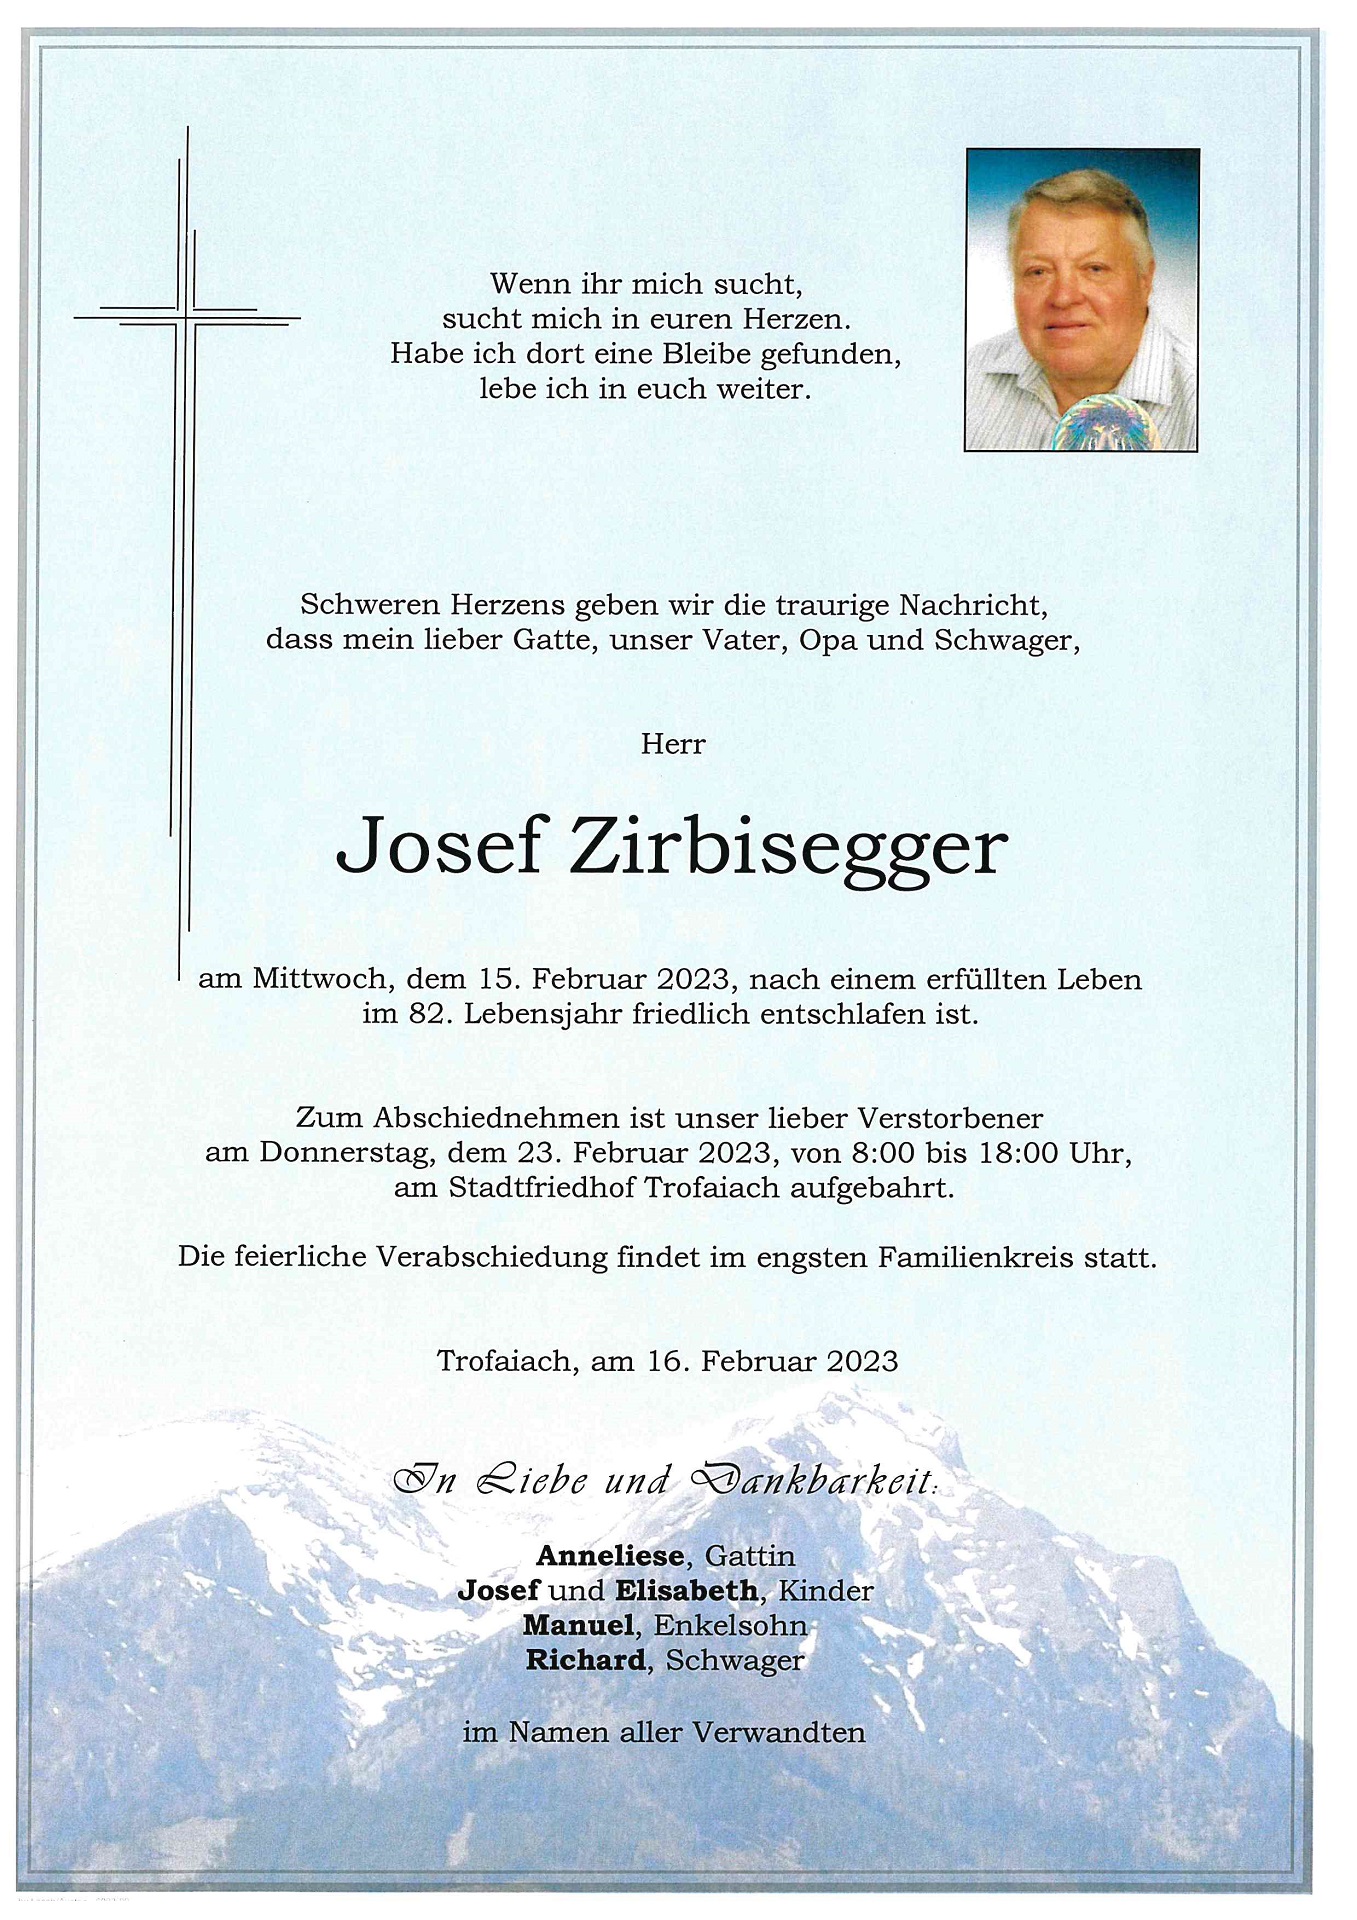 Zirbisegger Josef